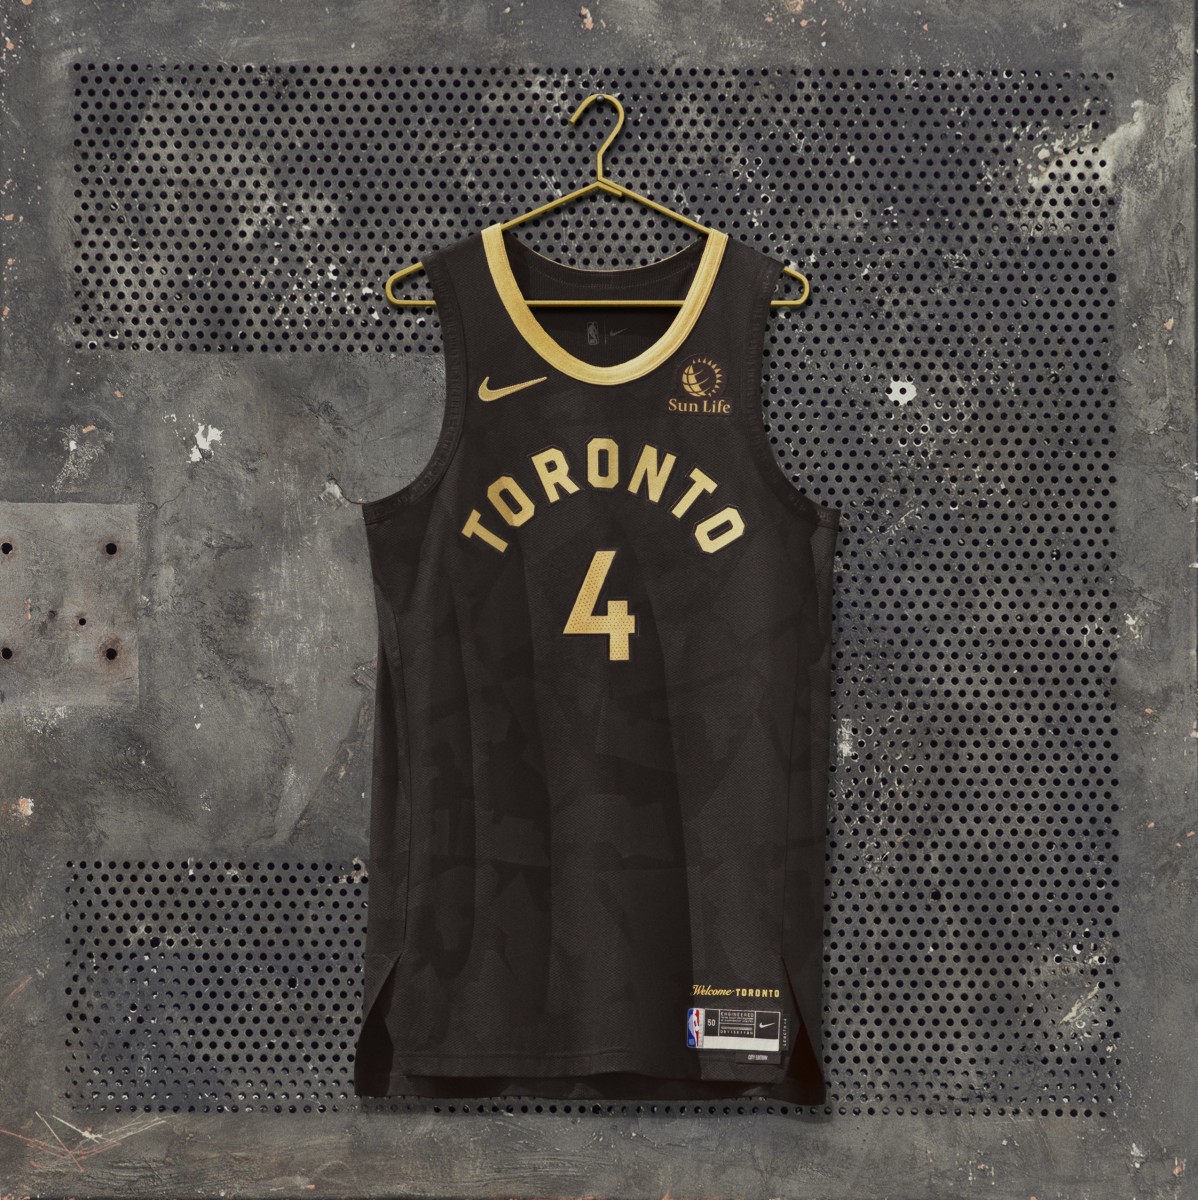 Utah Jazz unveil new black City Edition jerseys